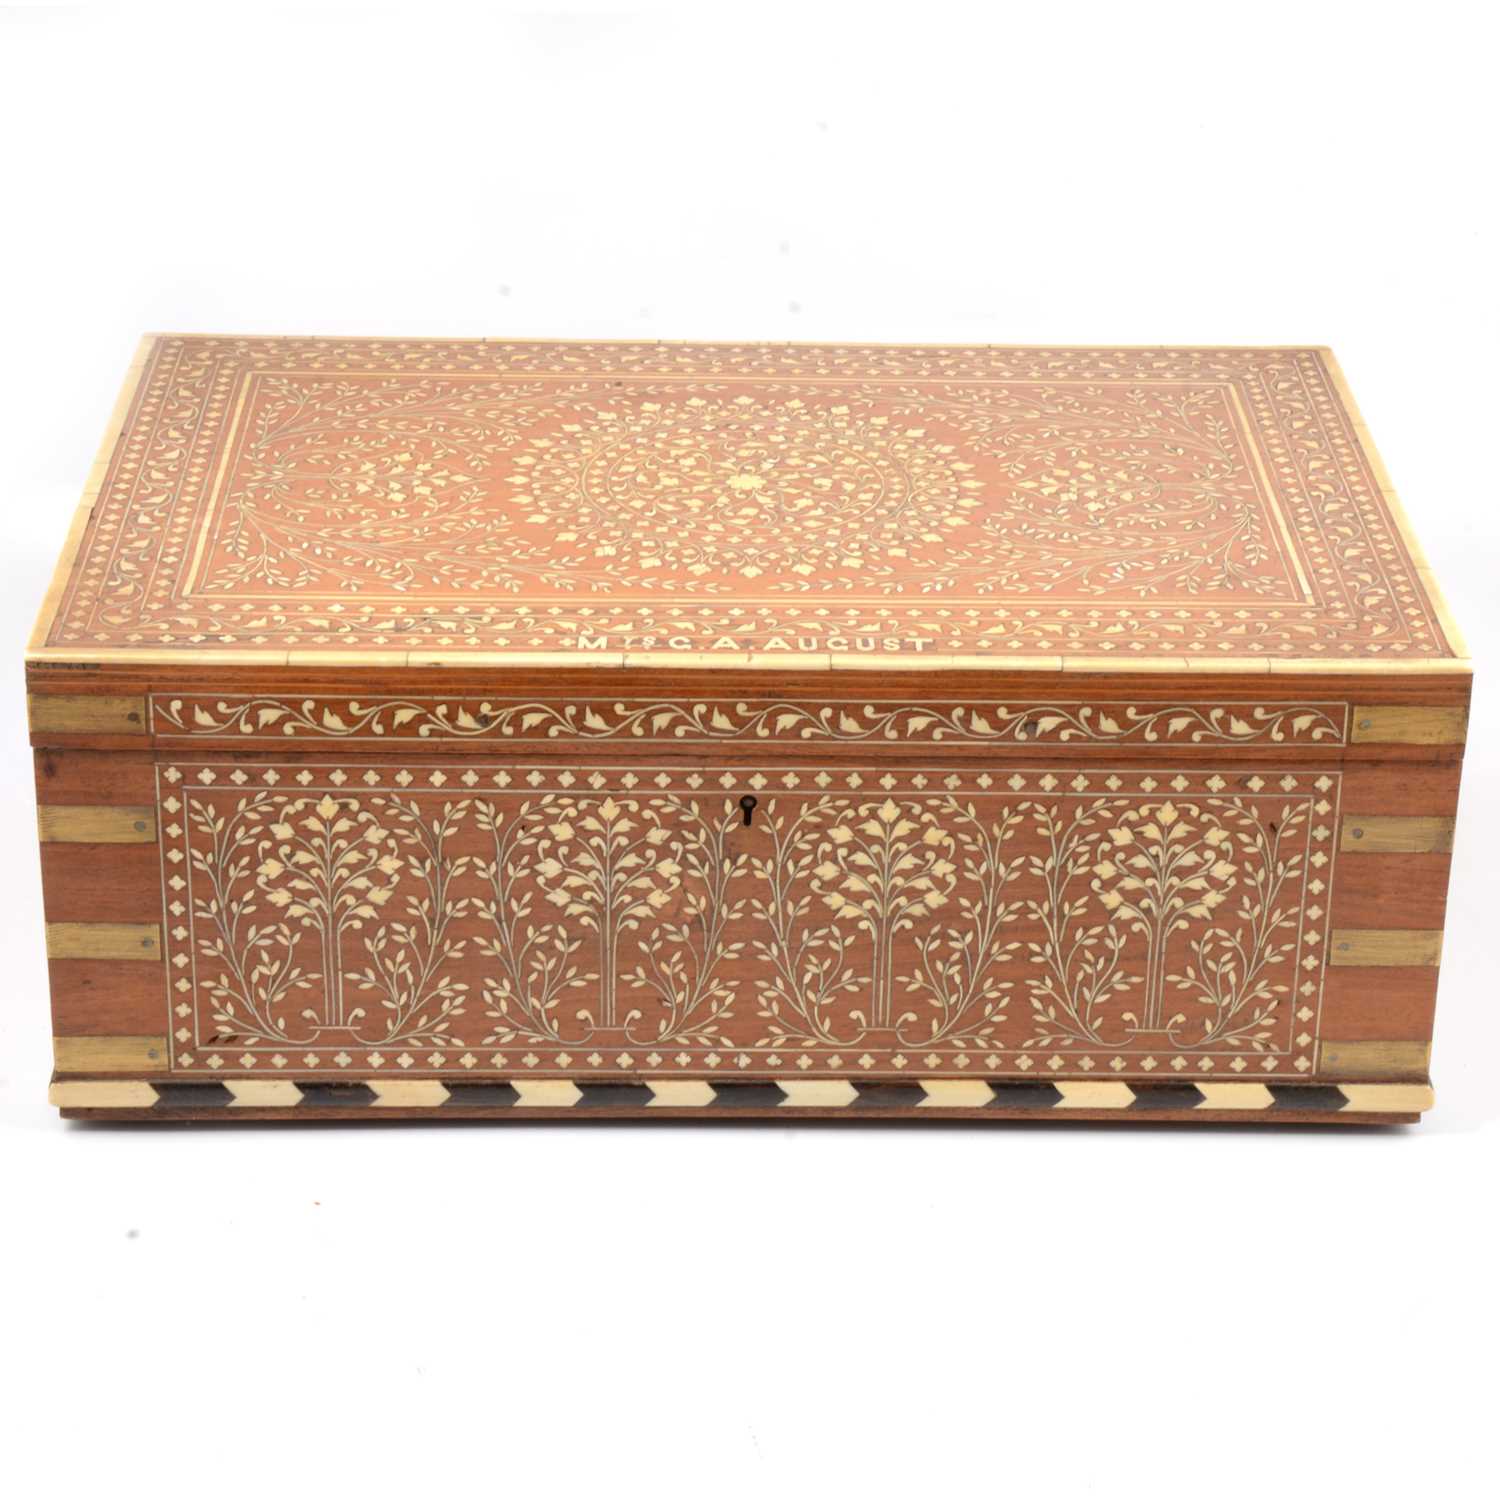 Lot 137 - Indian ivory inlaid box, Hishiarpur.